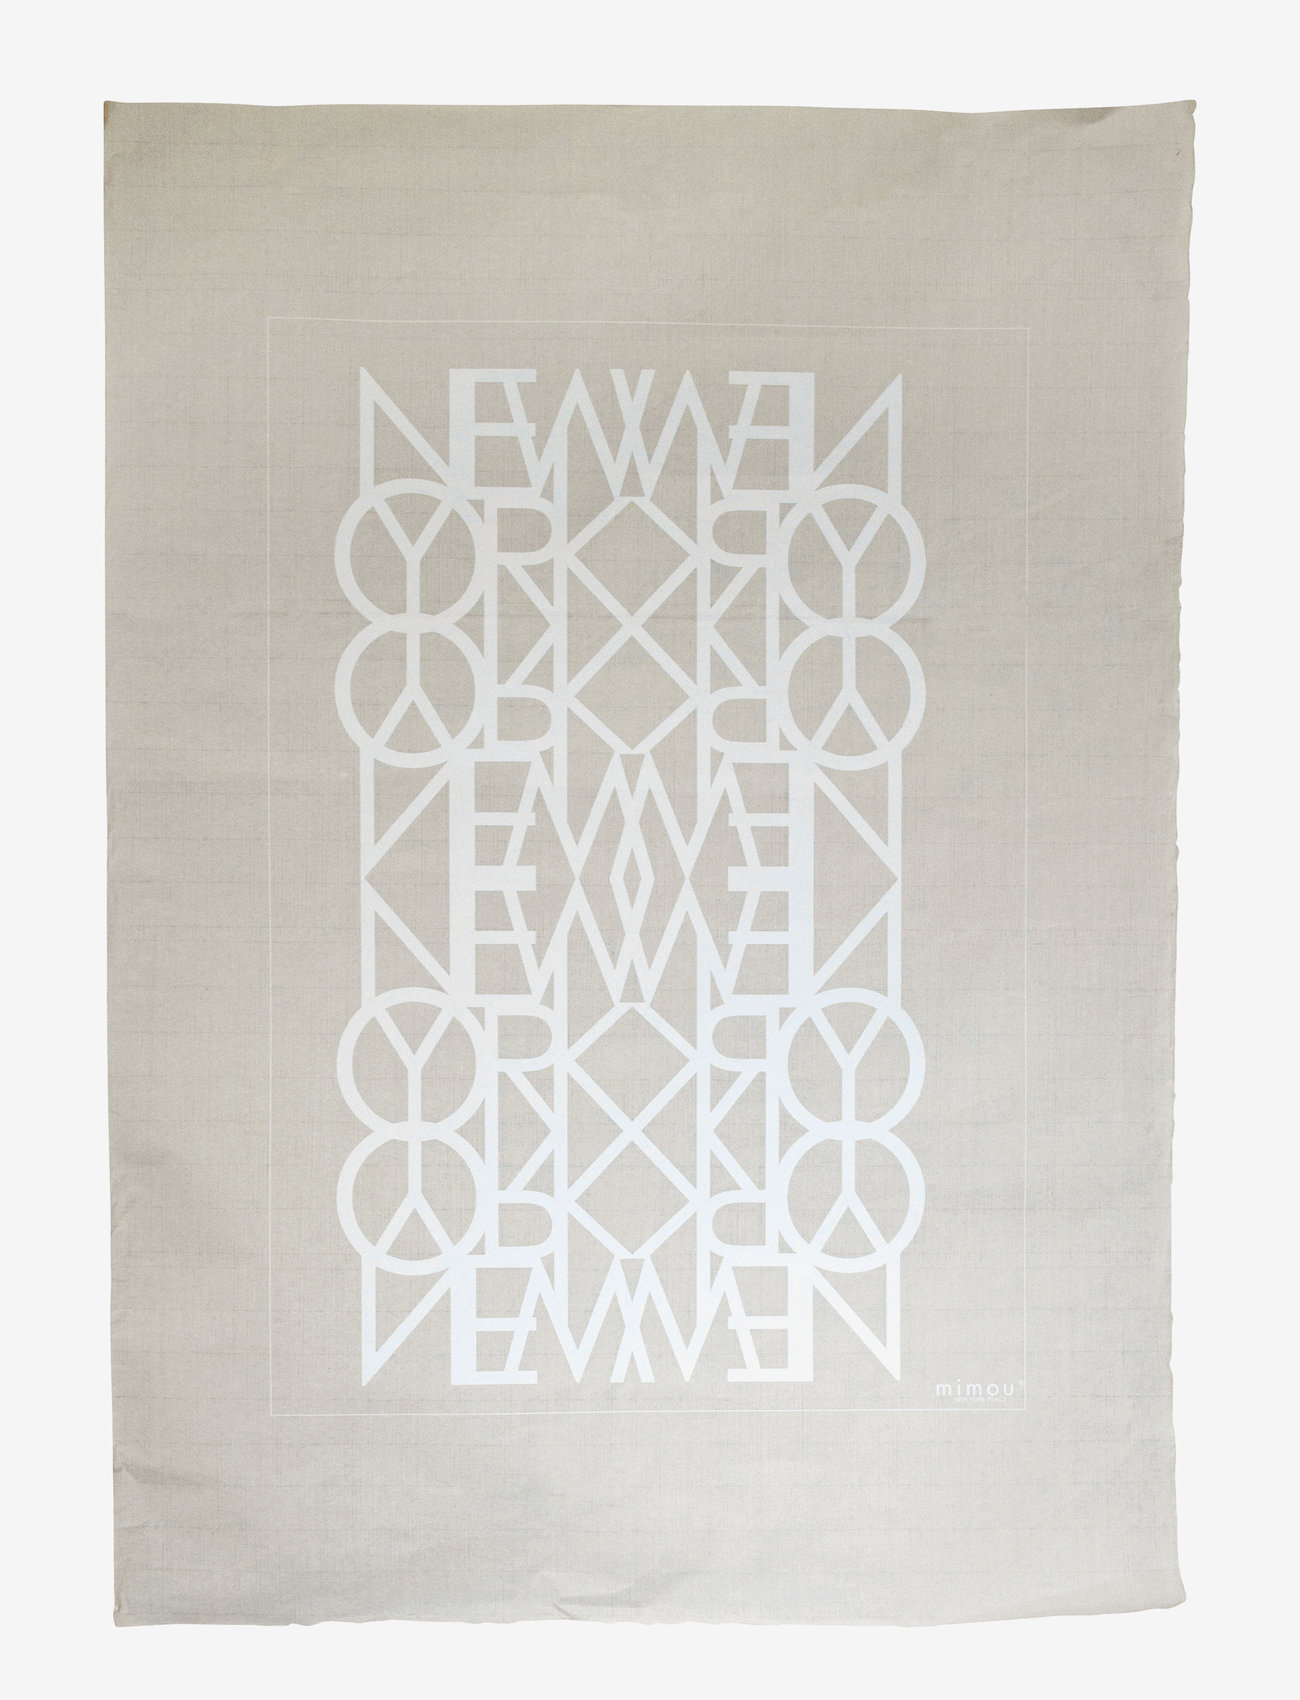 Mimou - Handprinted poster New York Peace - die niedrigsten preise - white - 0